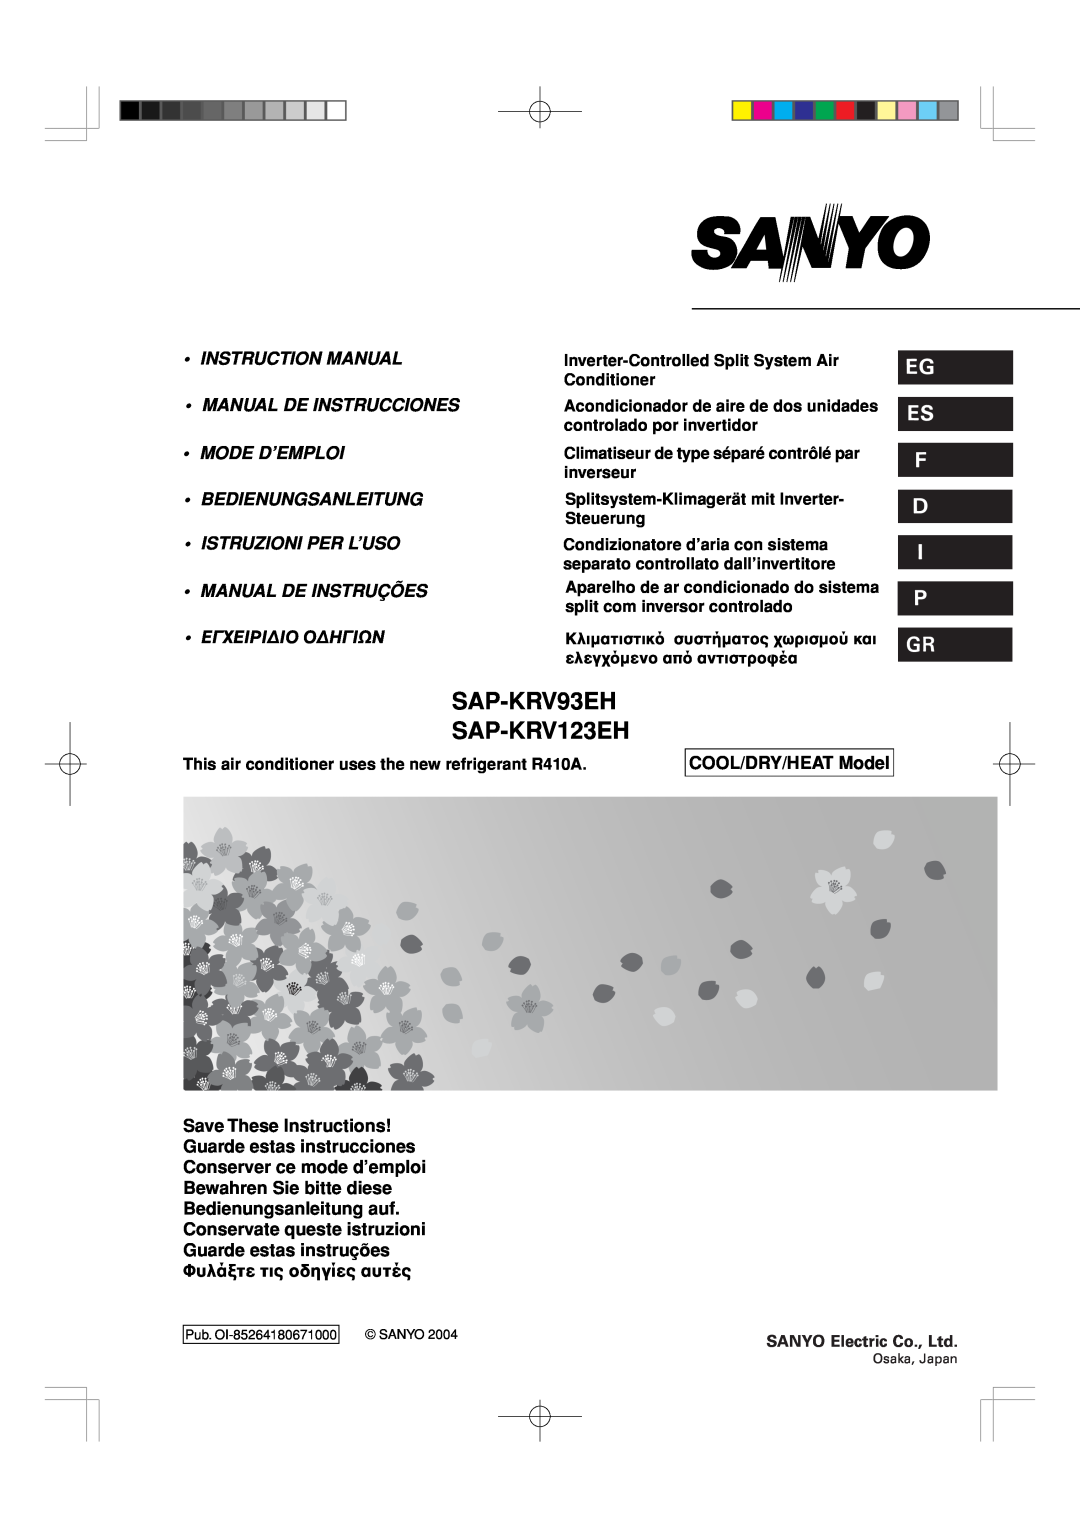 Sanyo instruction manual SAP-KRV93EH SAP-KRV123EH, Bedienungsanleitung Istruzioni Per L’Uso Manual De Instruções, Φυλά 